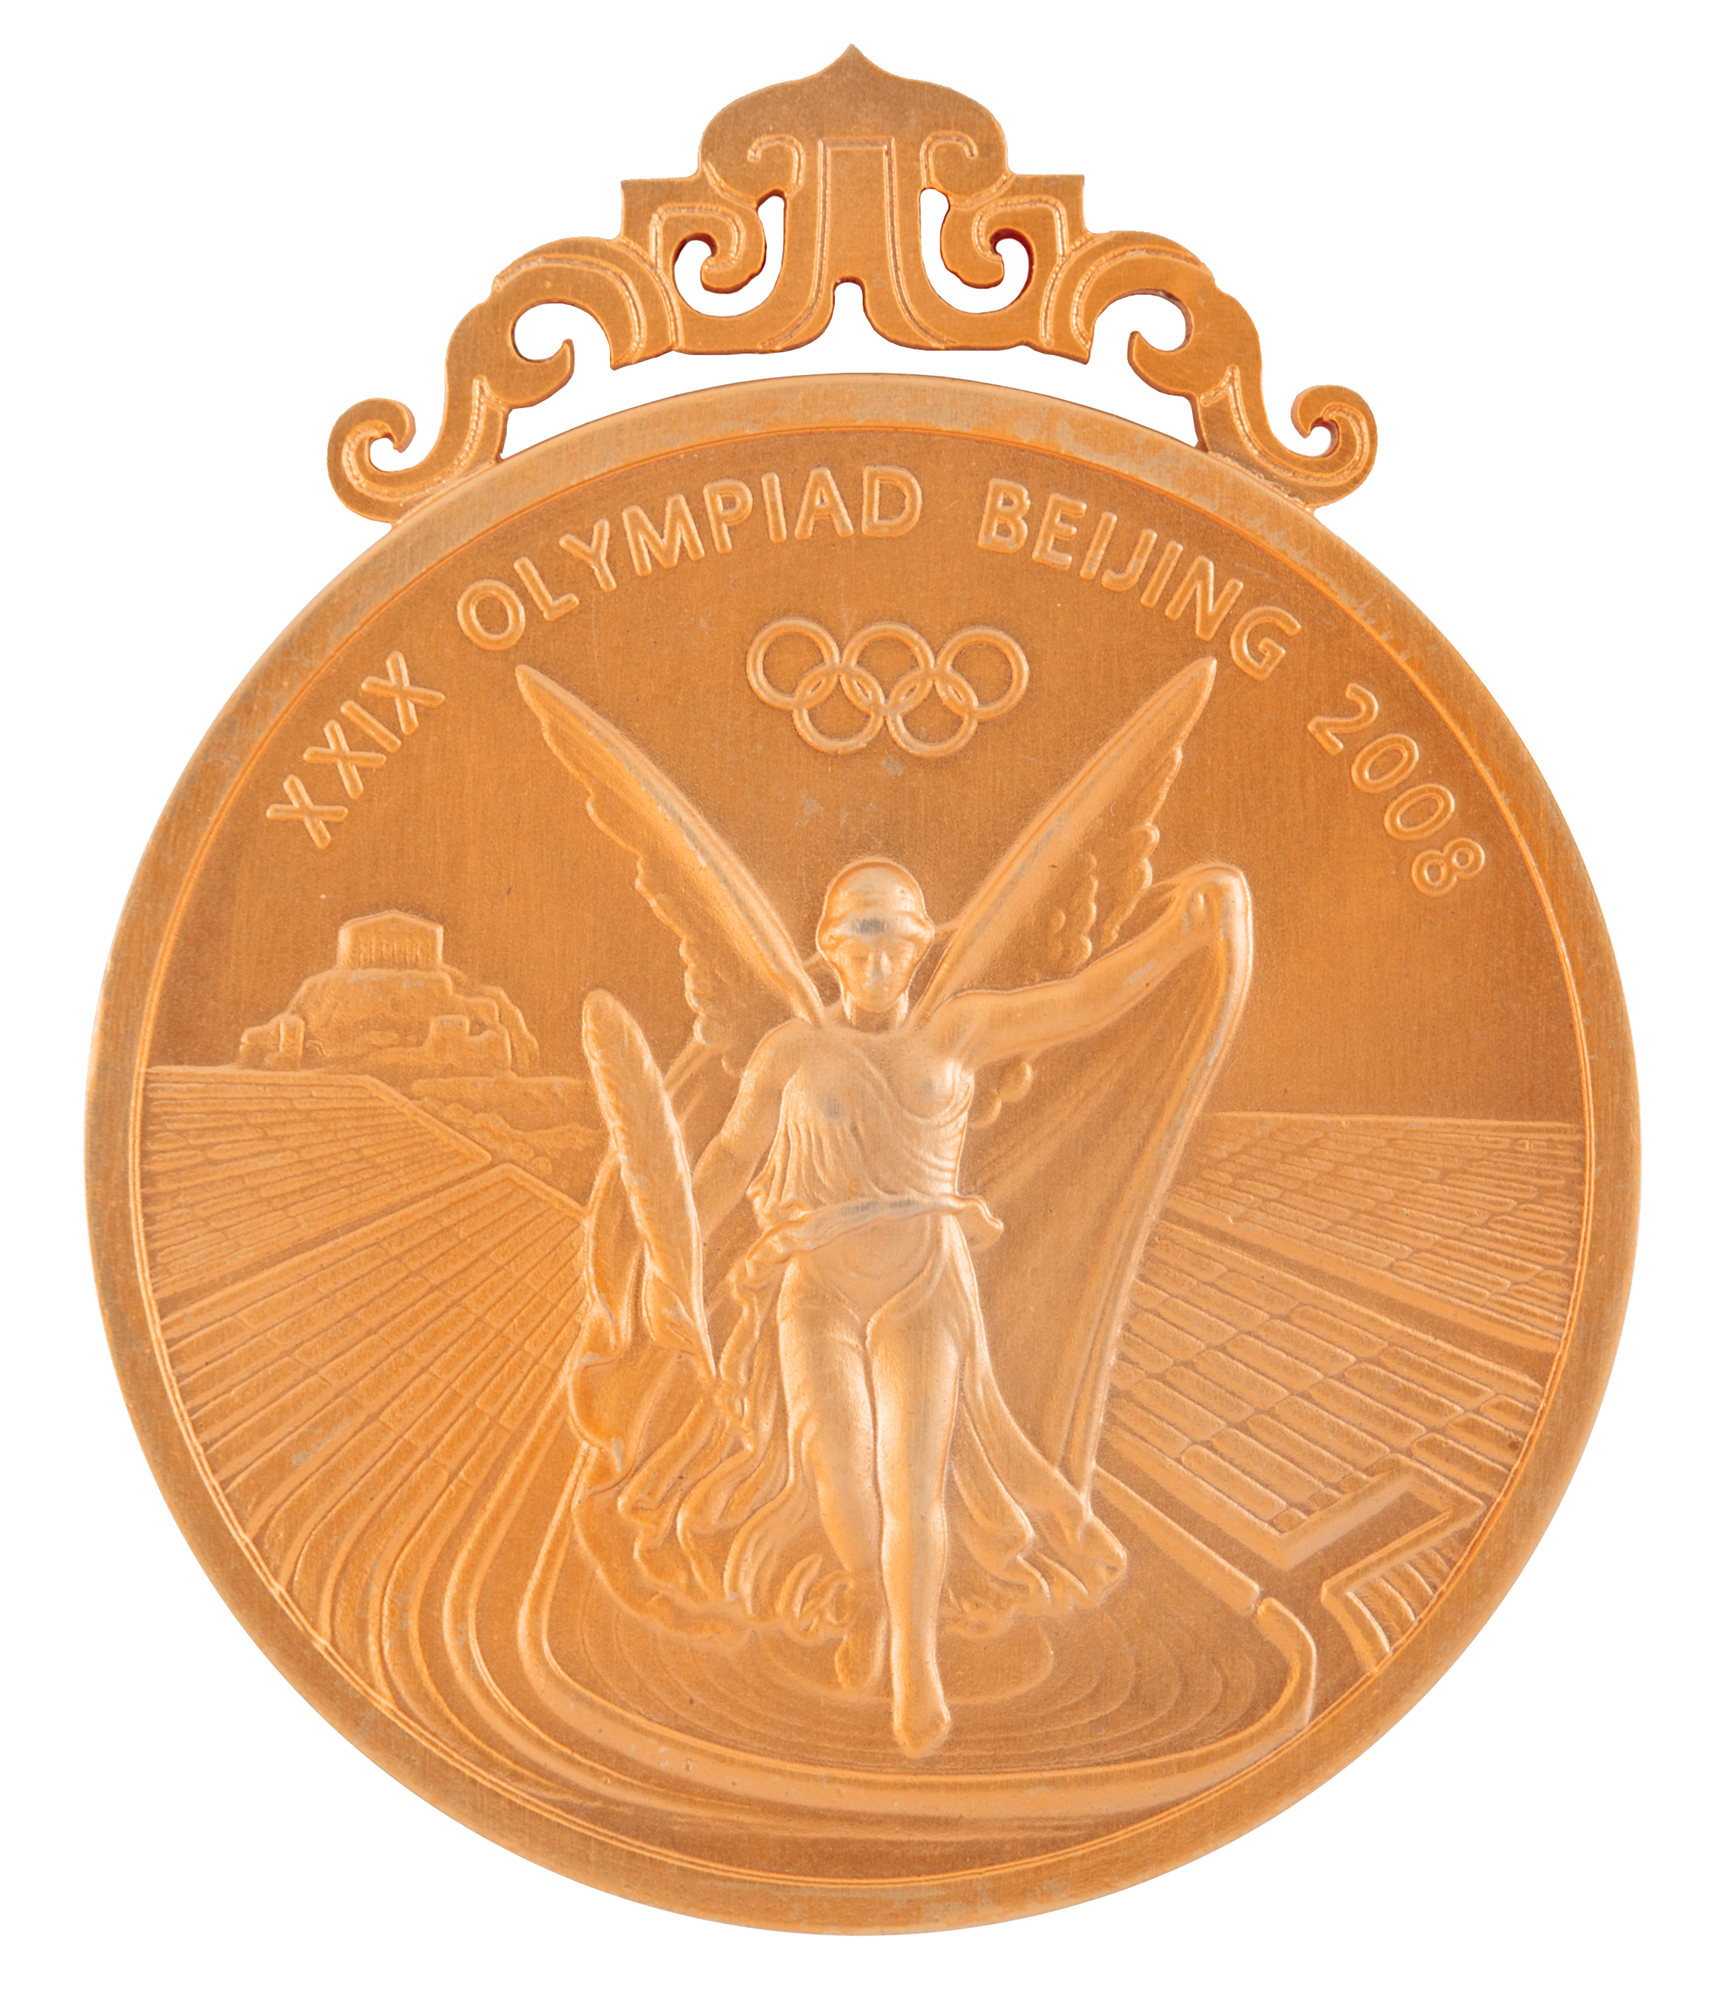 Lot #6167 Beijing 2008 Summer Olympics Gold Winner's Medal